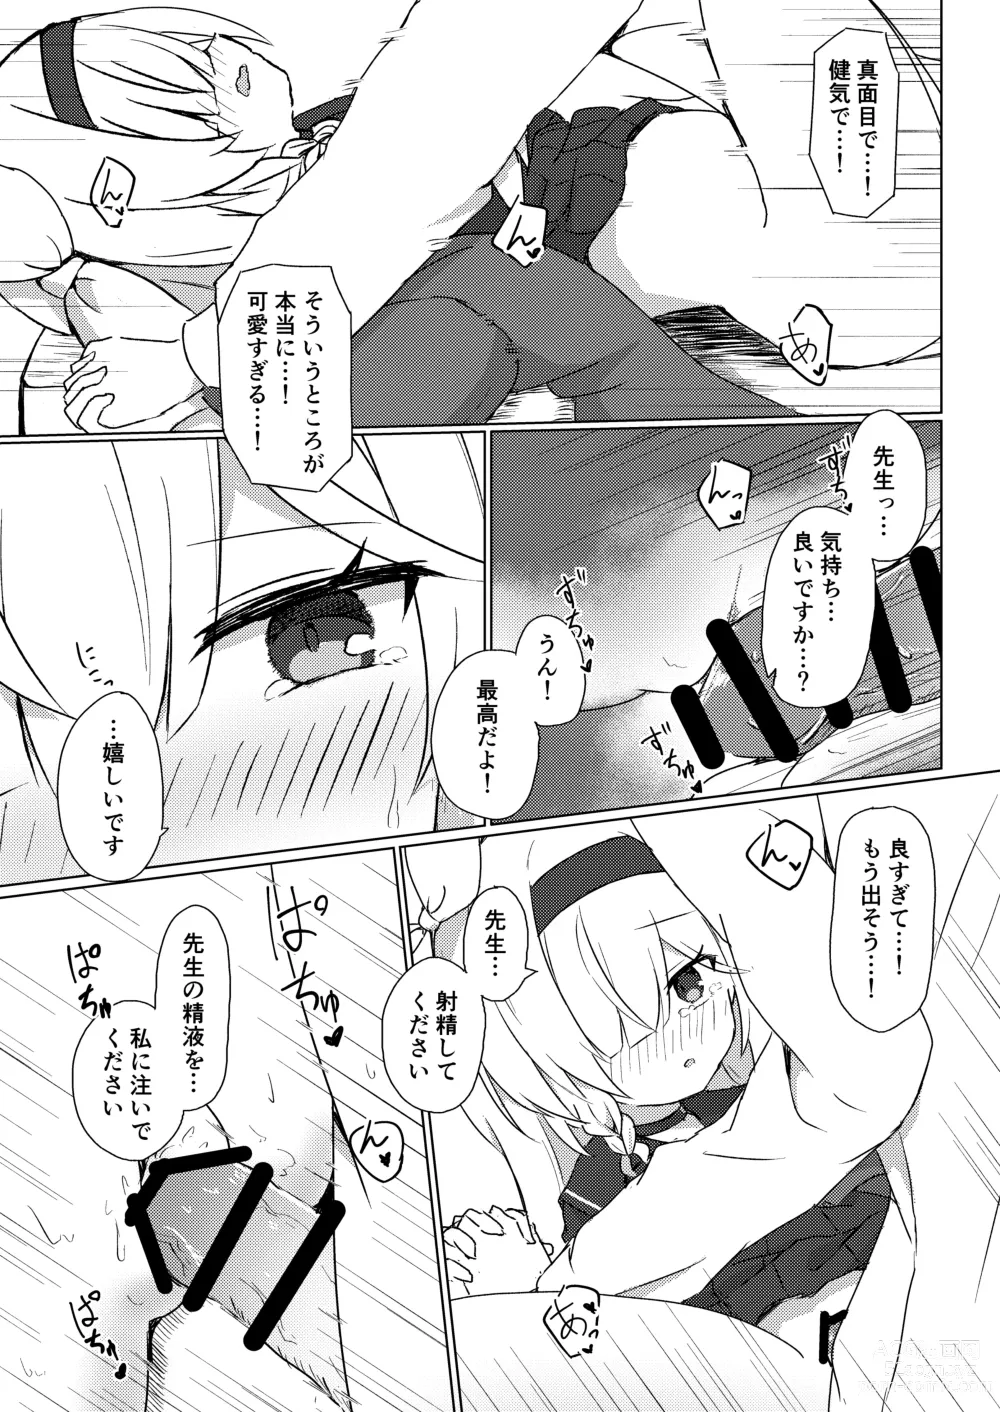 Page 3 of doujinshi ERROR: XXXX